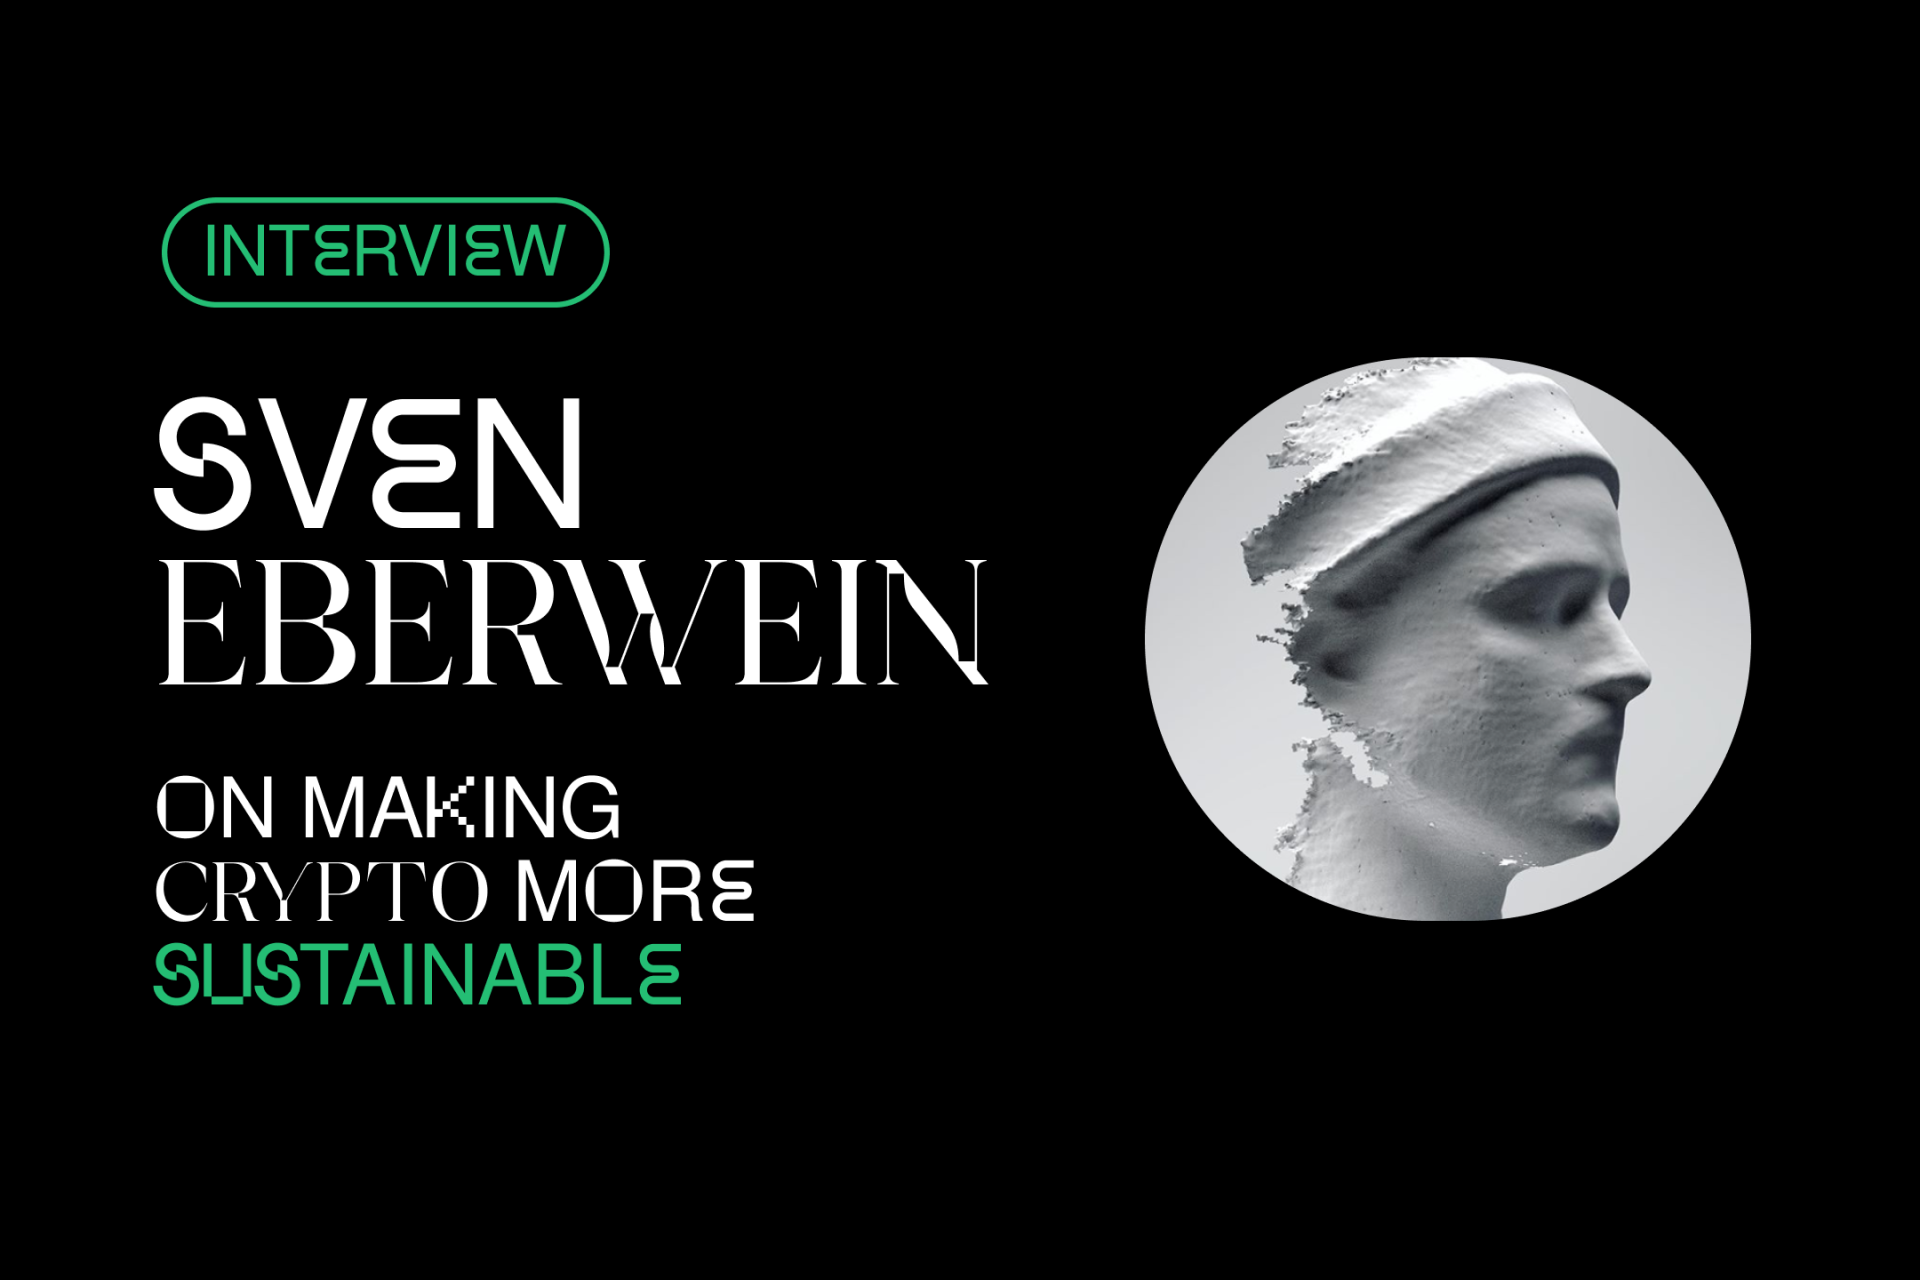 Sven Eberwein on making crypto more environmentally sustainable.